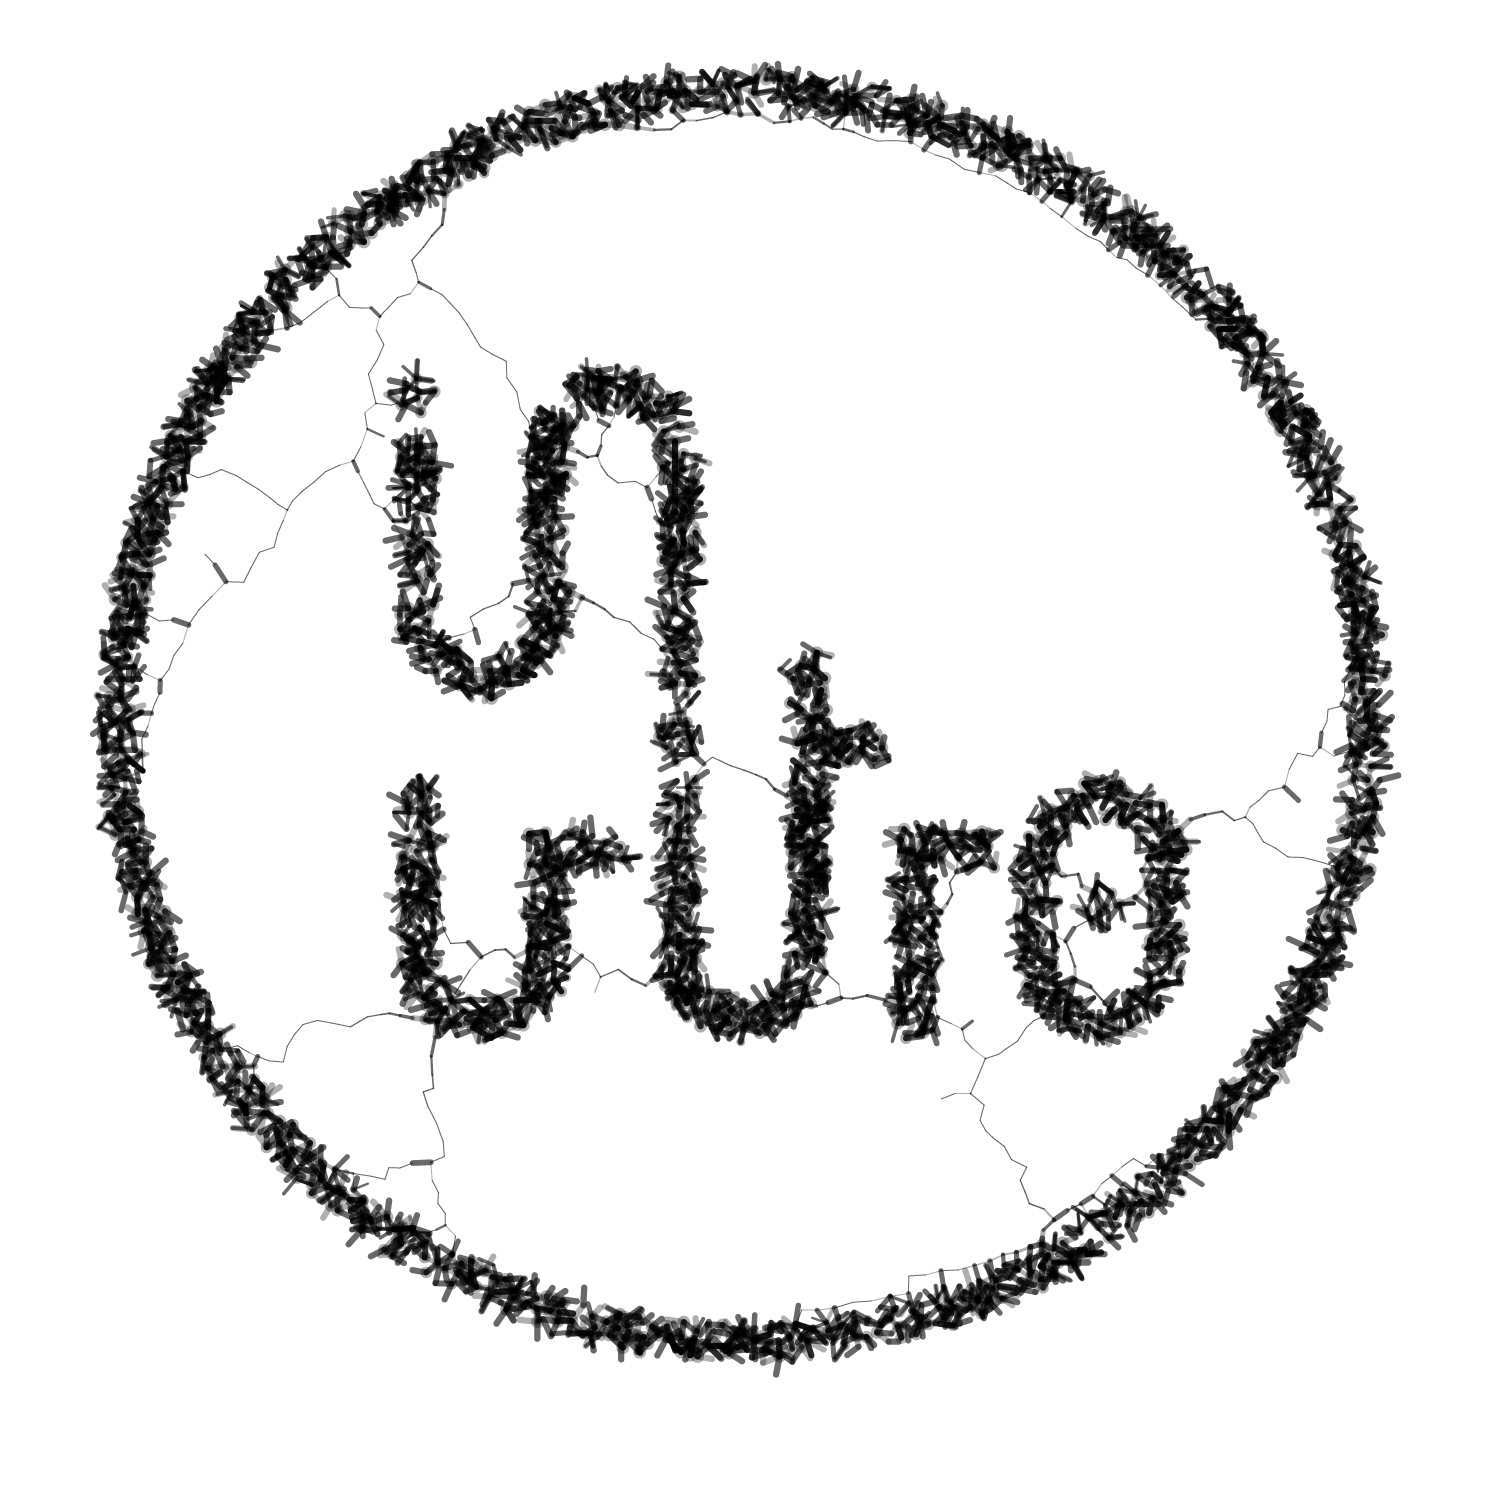 03-logo